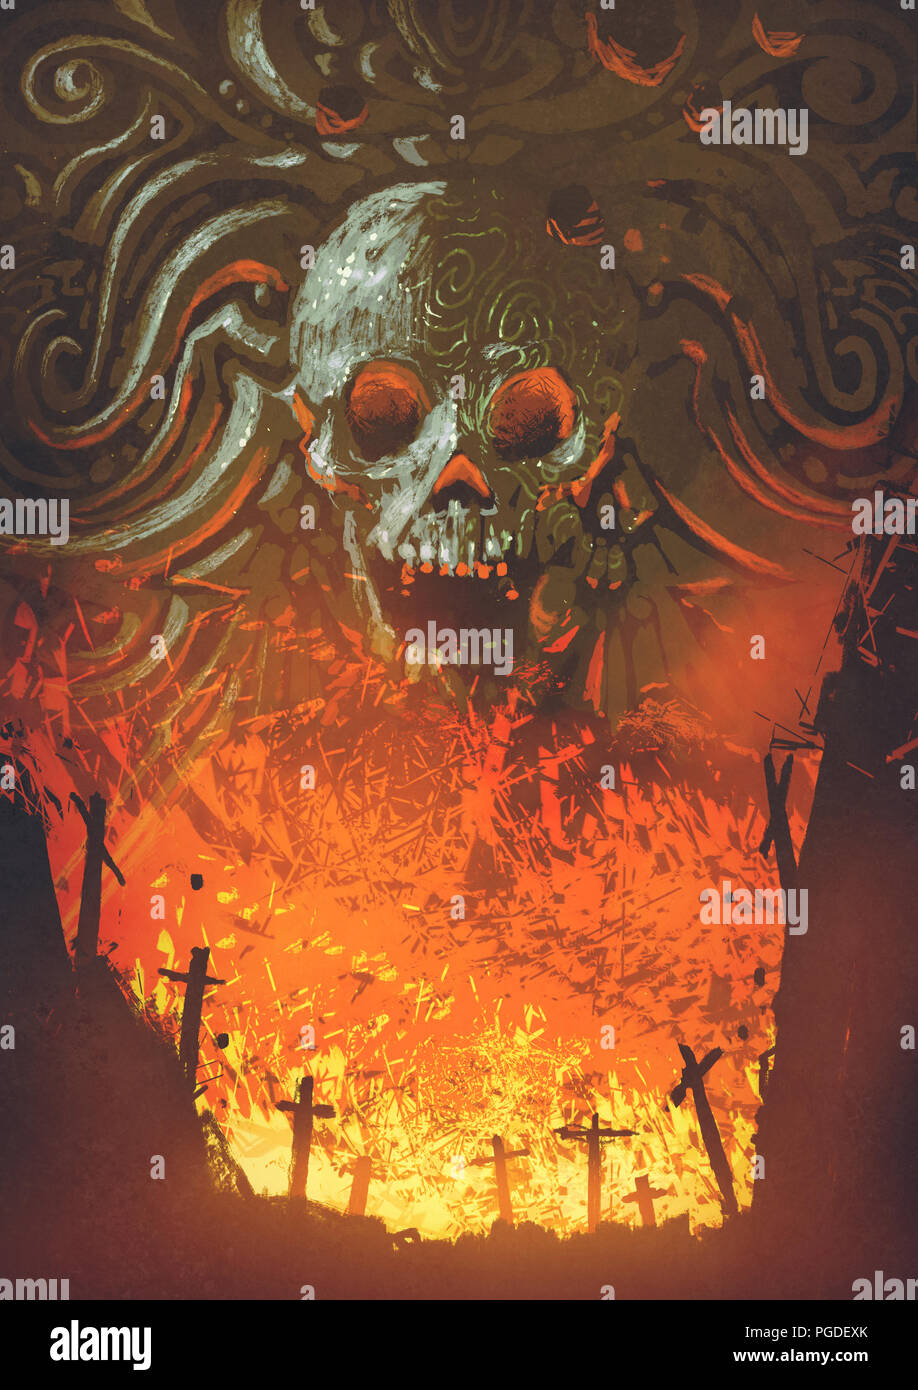 Brennende Friedhof im Schädel, Höhle, digital art Stil, Illustration Malerei Stockfoto